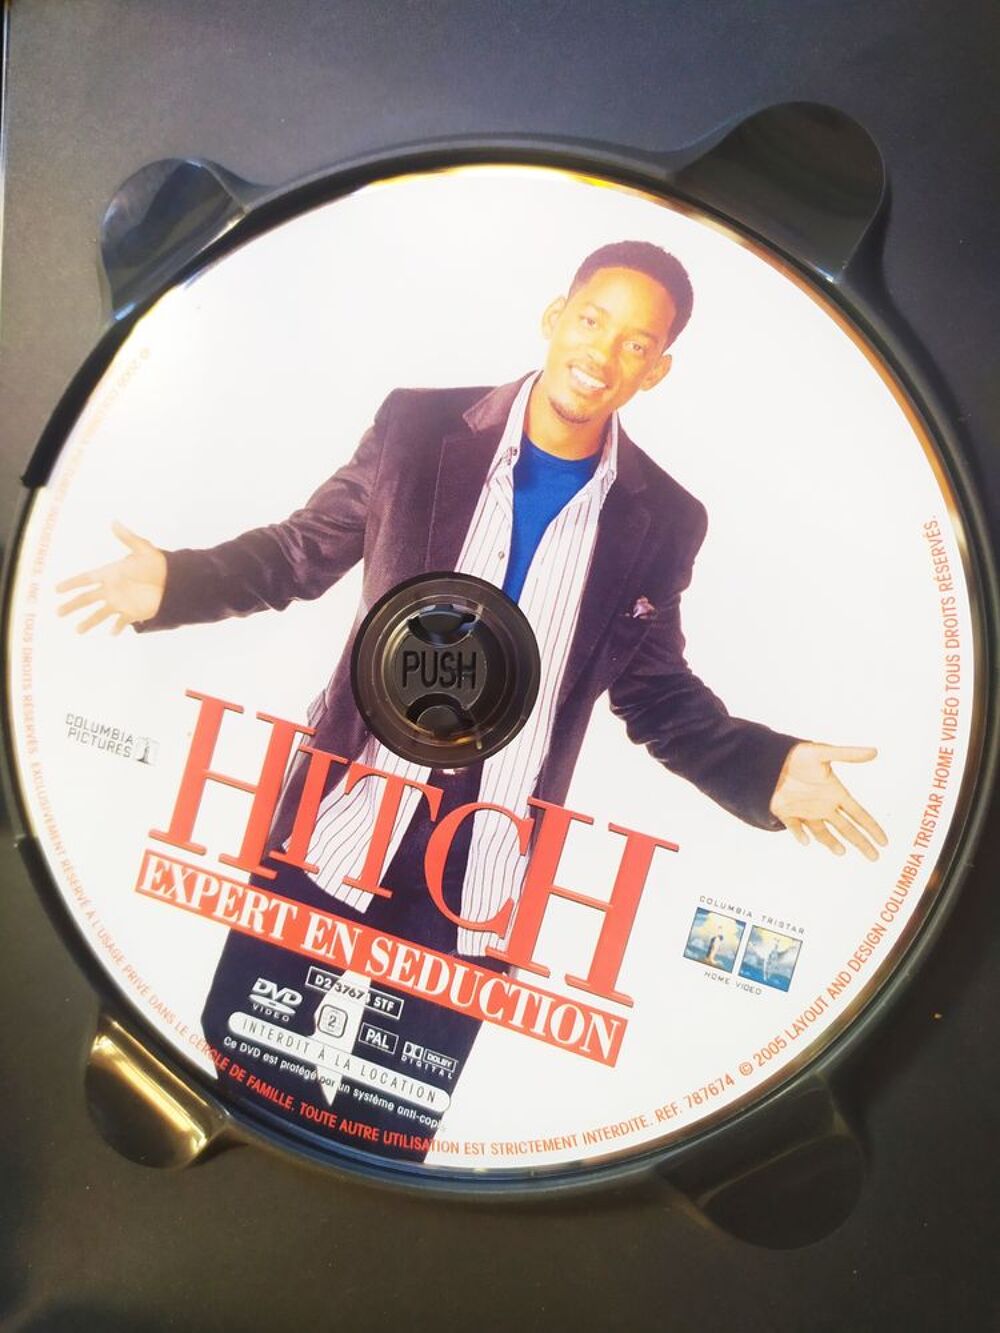 DVD Hitch Expert en s&eacute;duction DVD et blu-ray